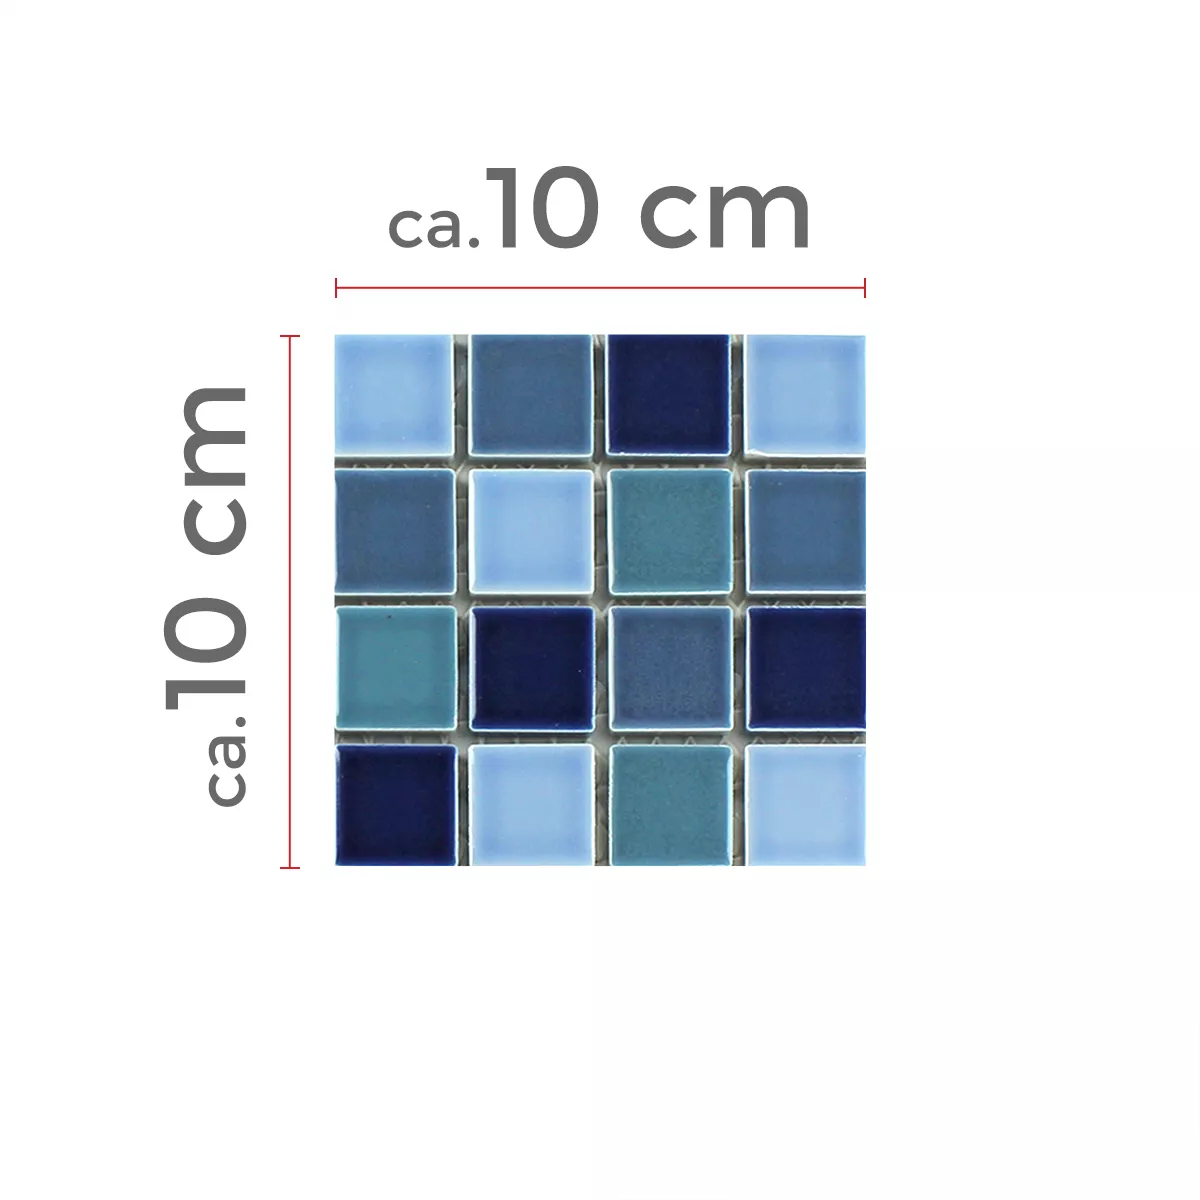 Sample Mosaic Tiles Ceramic Blue Mix Glossy